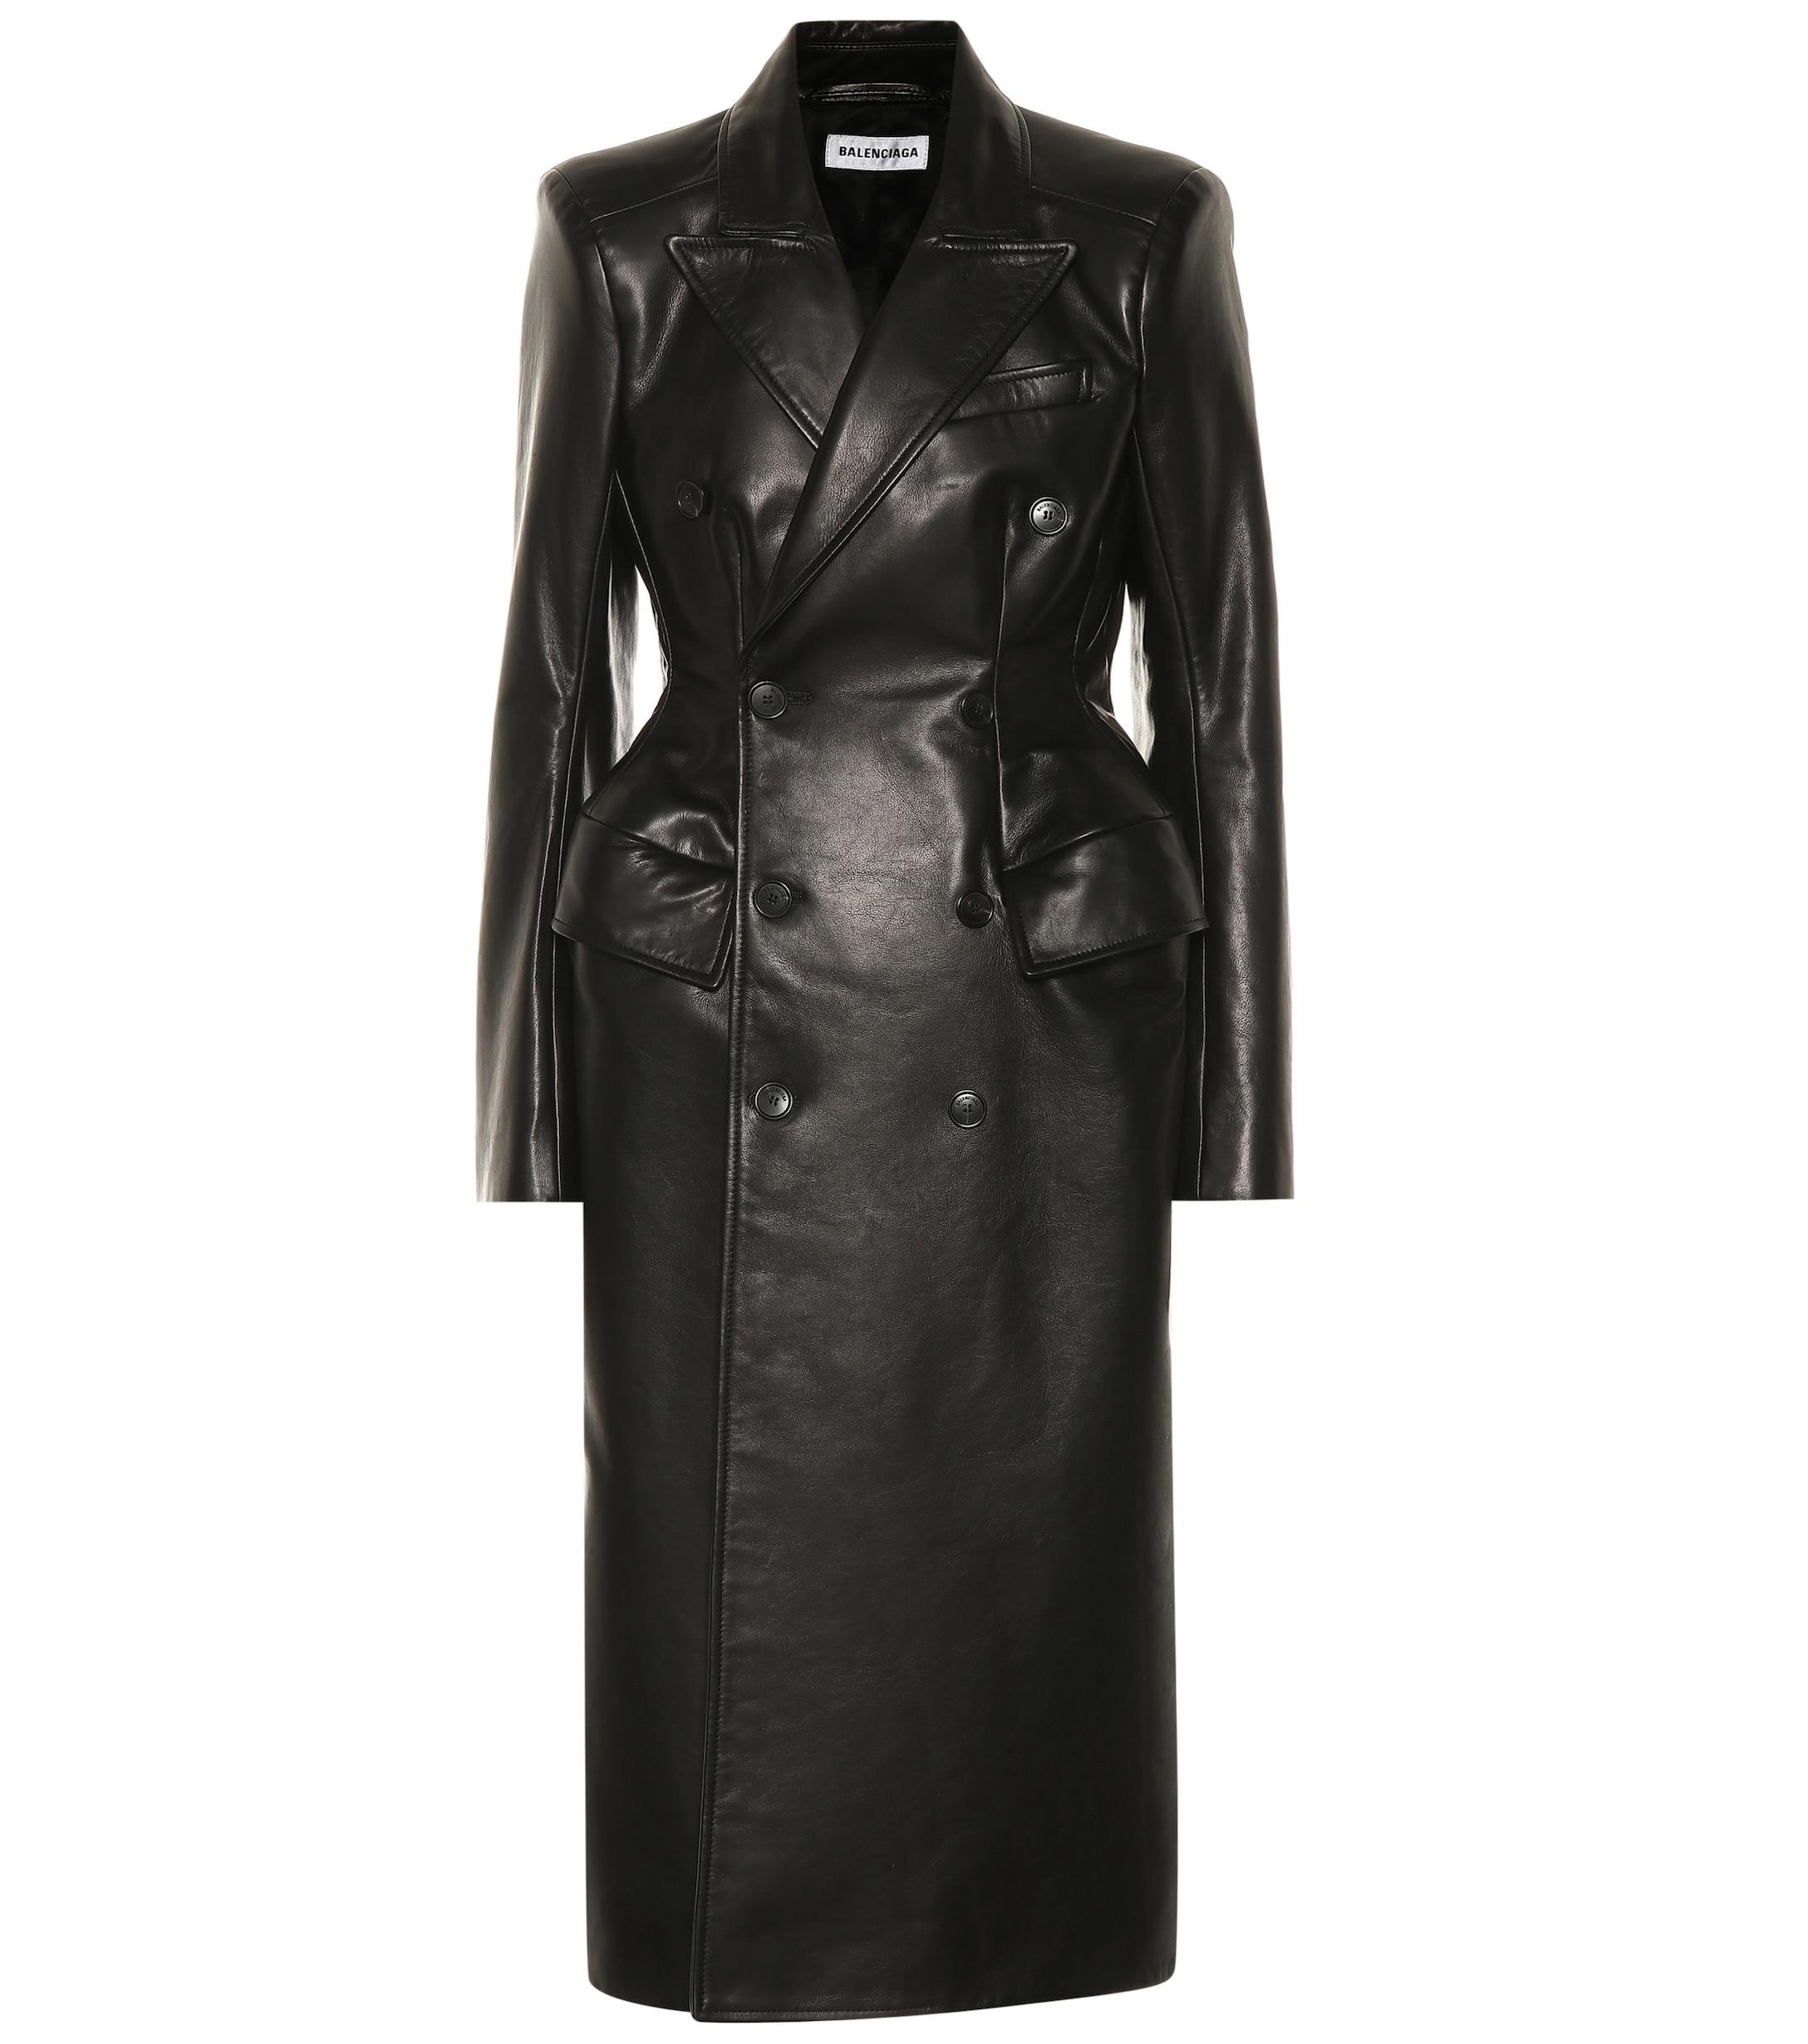 Balenciaga Hourglass Leather Coat in Black - Lyst